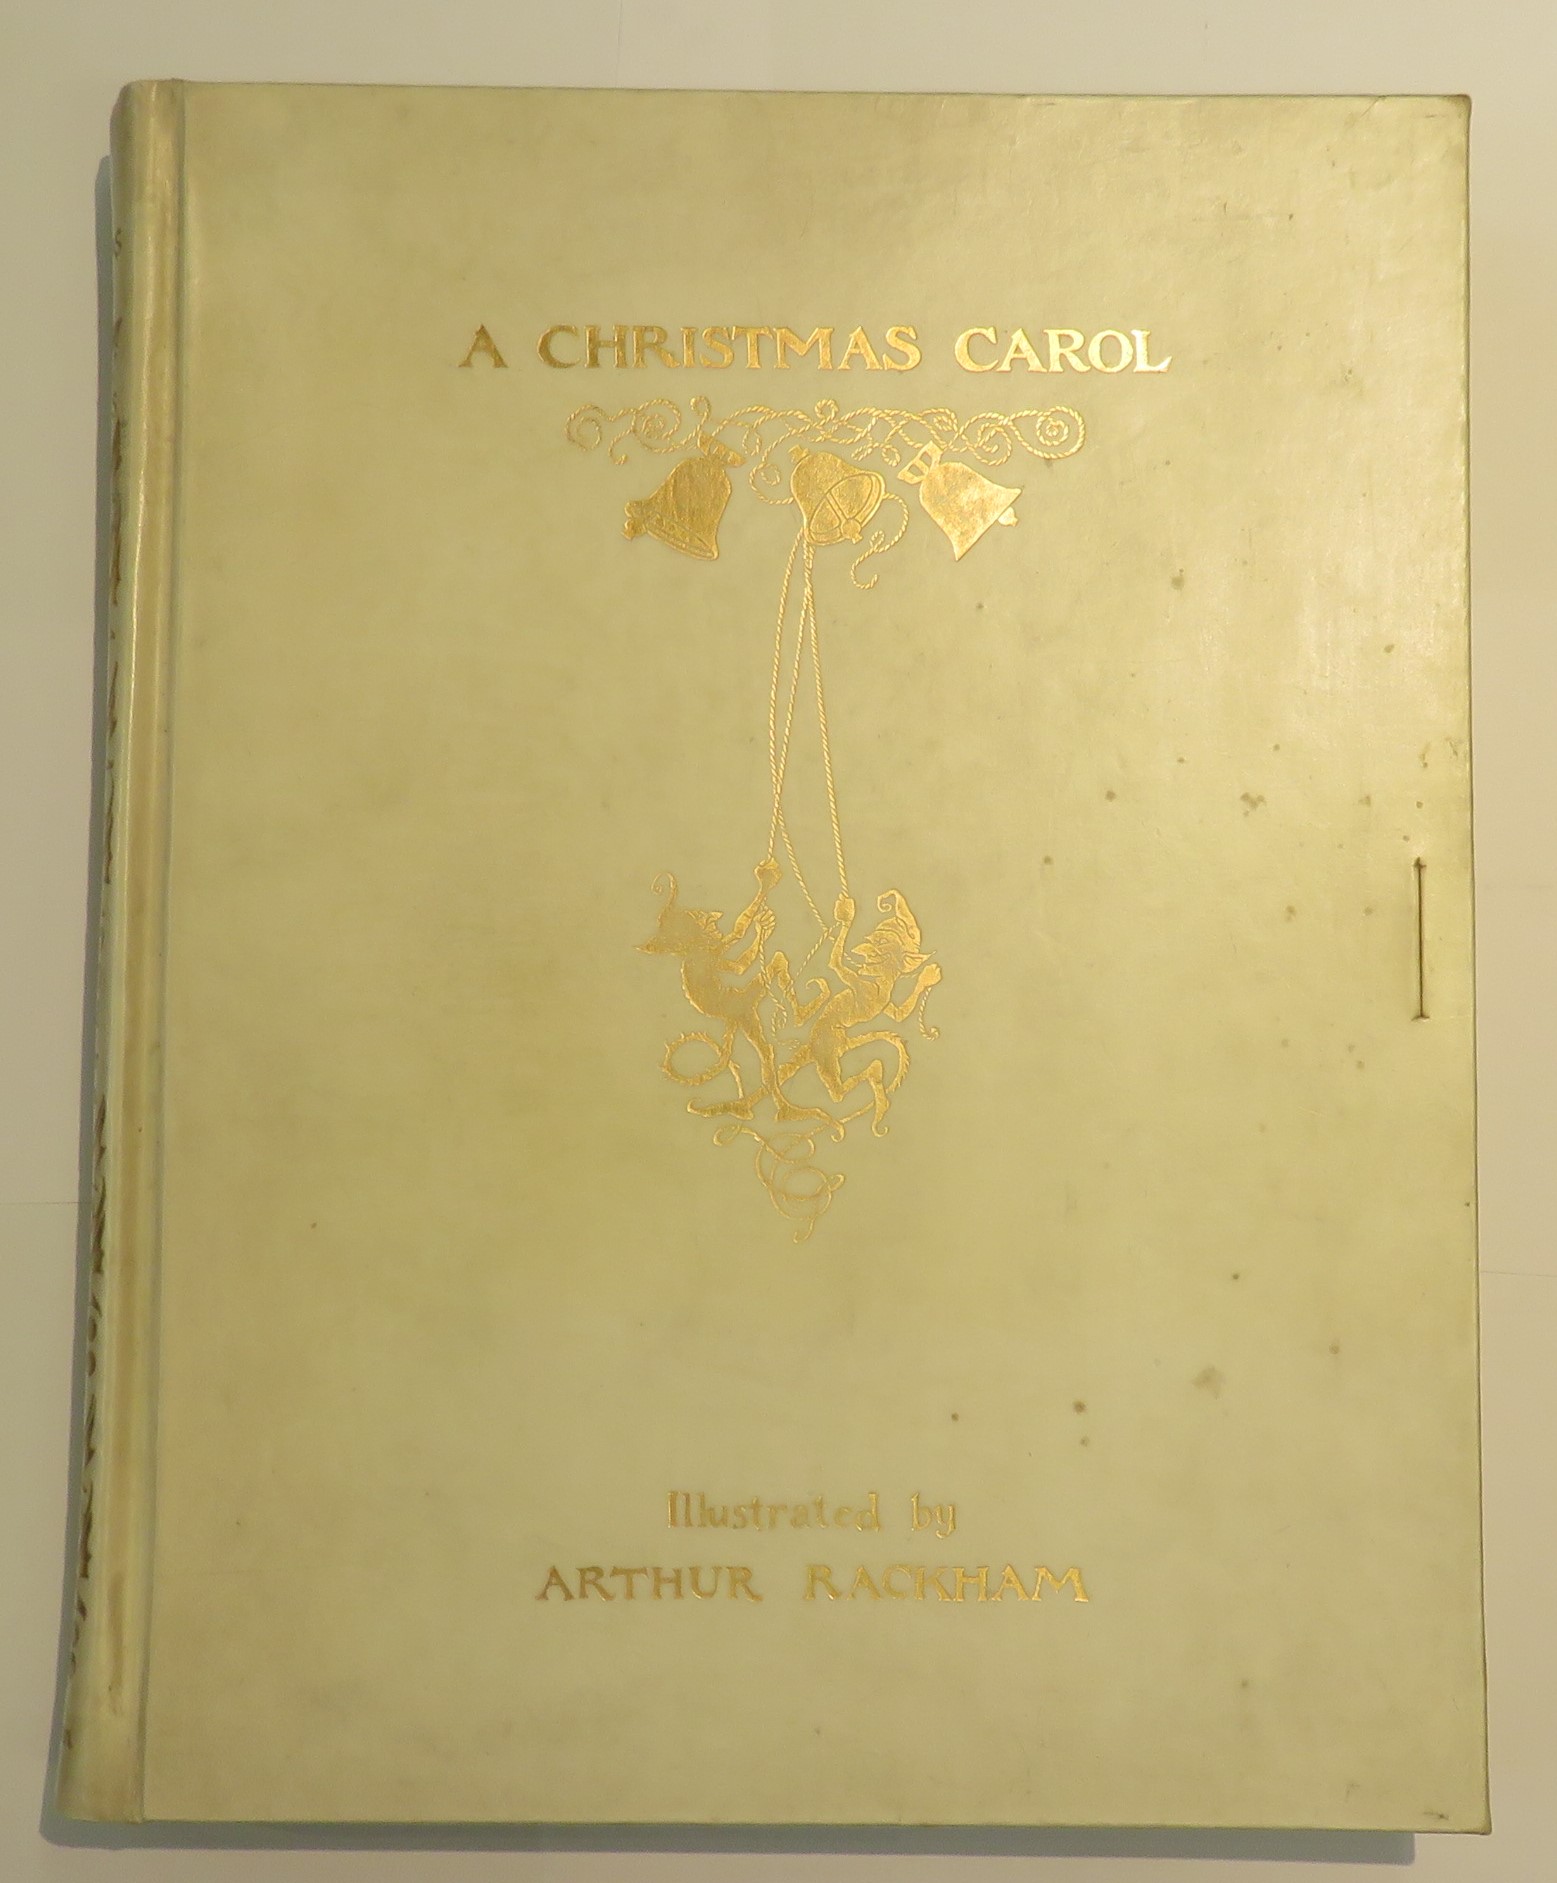 A Christmas Carol Illustrated by Arthur Rackham